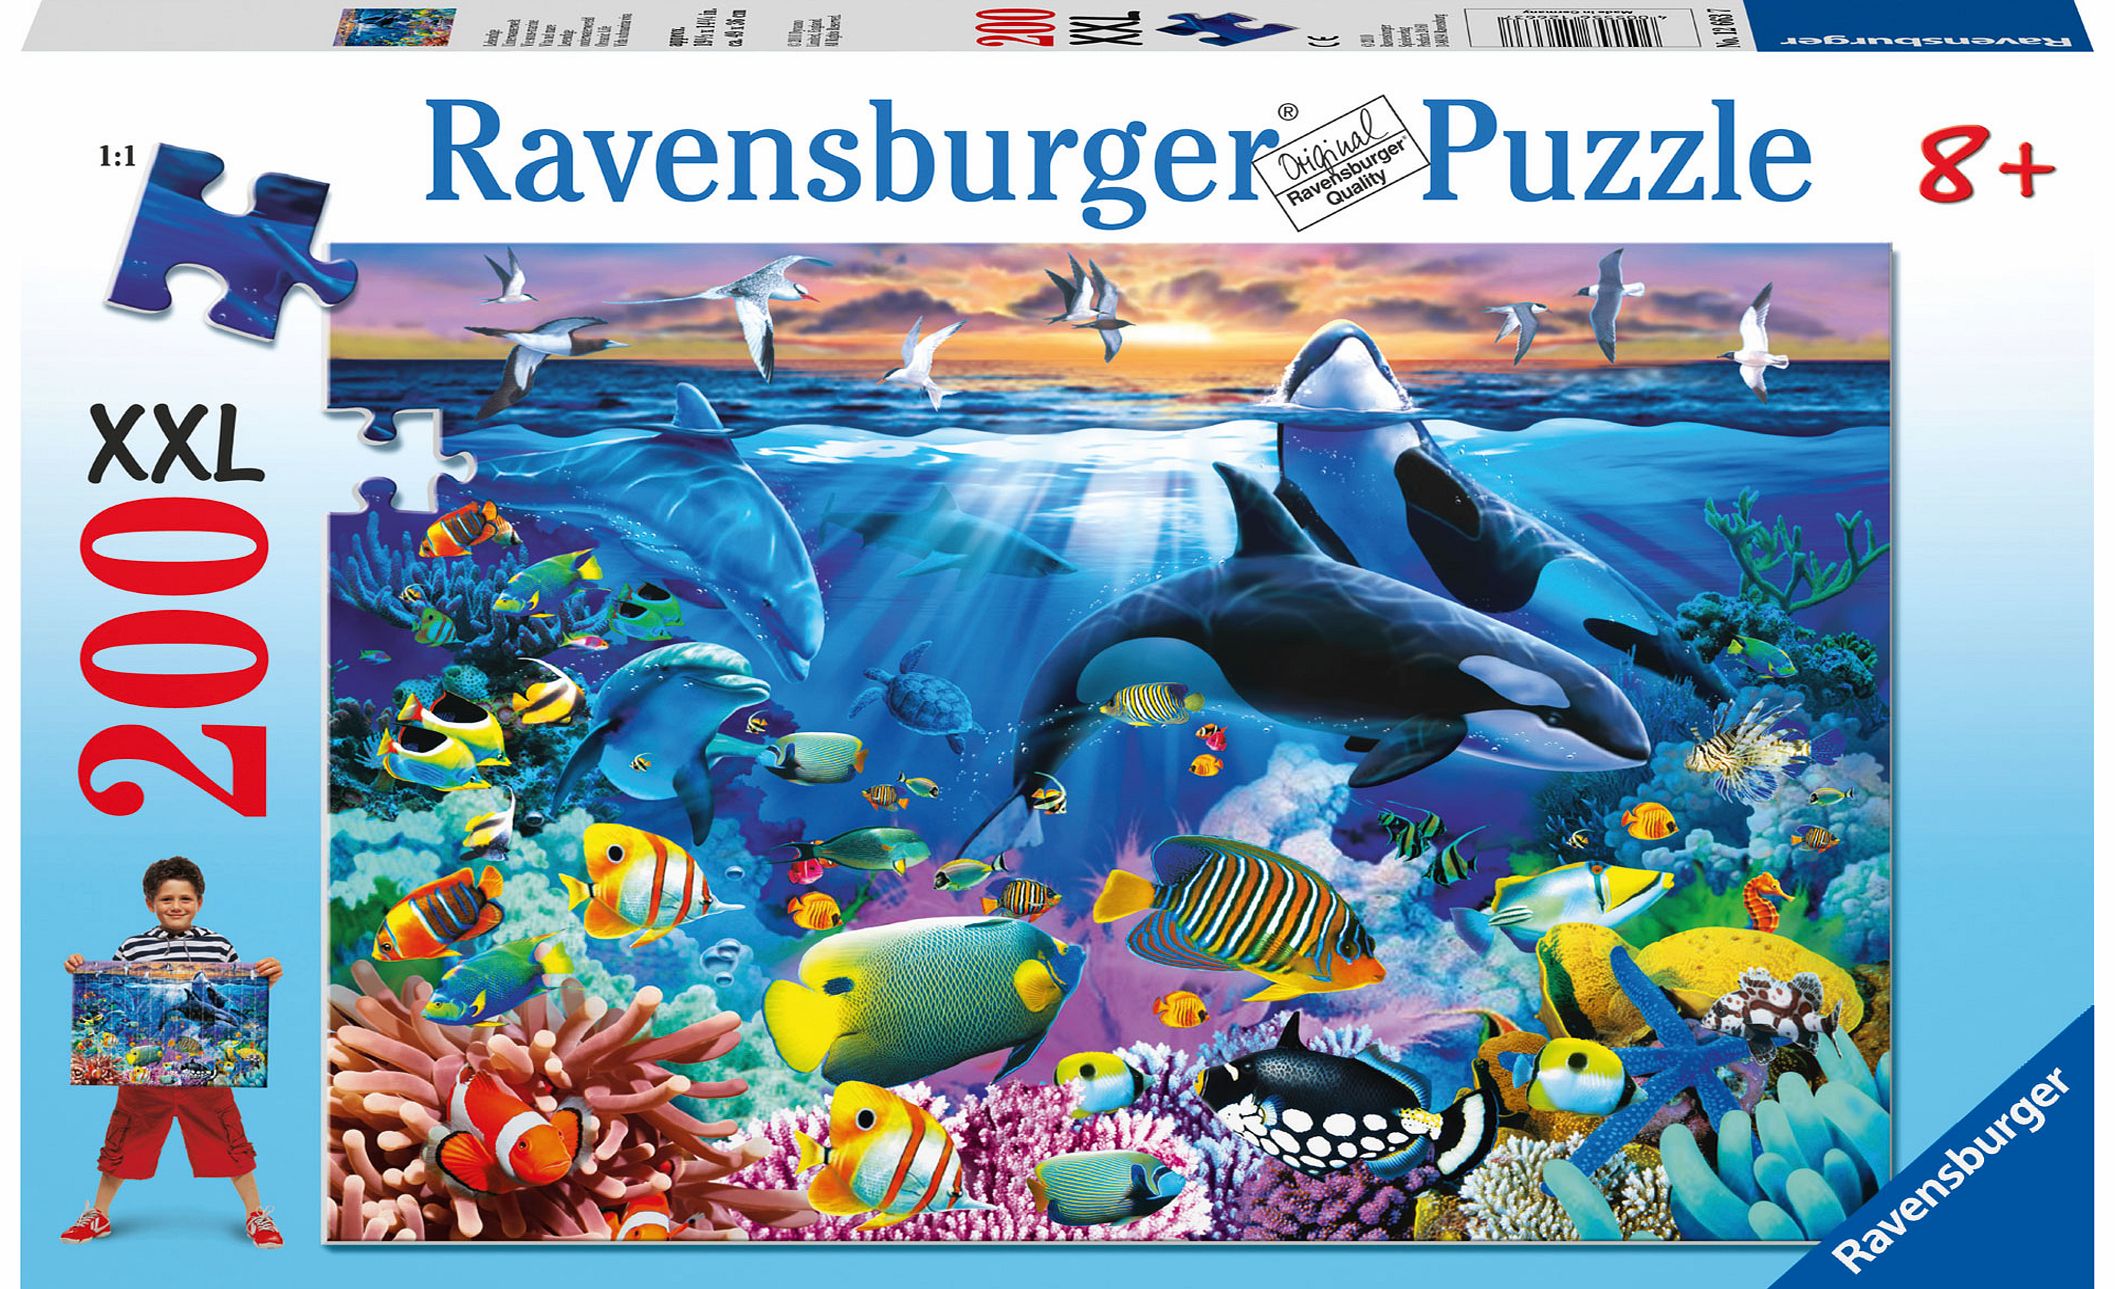 Ravensburger Ocean Life 200 Piece Jigsaw Puzzle - XXL